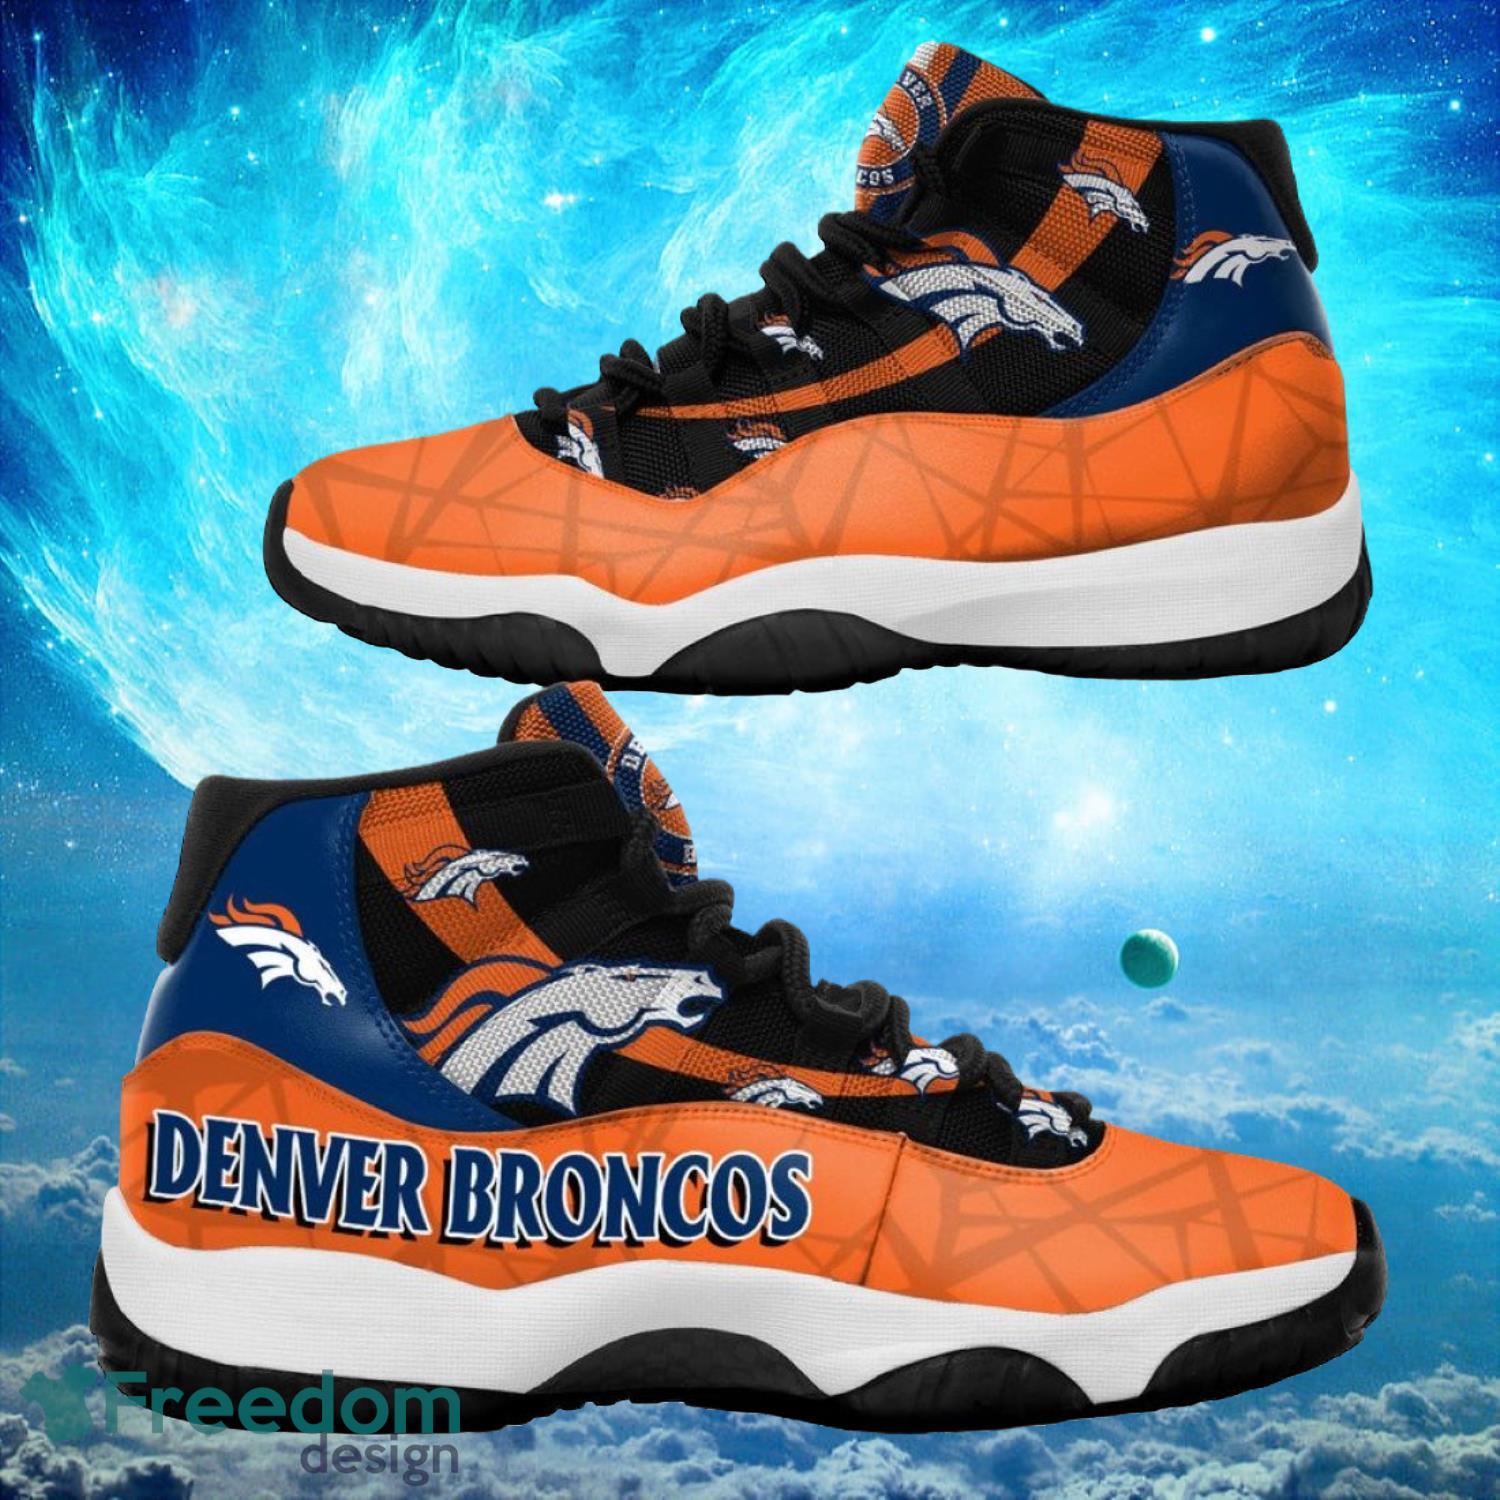 Denver Broncos NFL Air Jordan 11 Sneakers Shoes Gift For Fans Product Photo 1